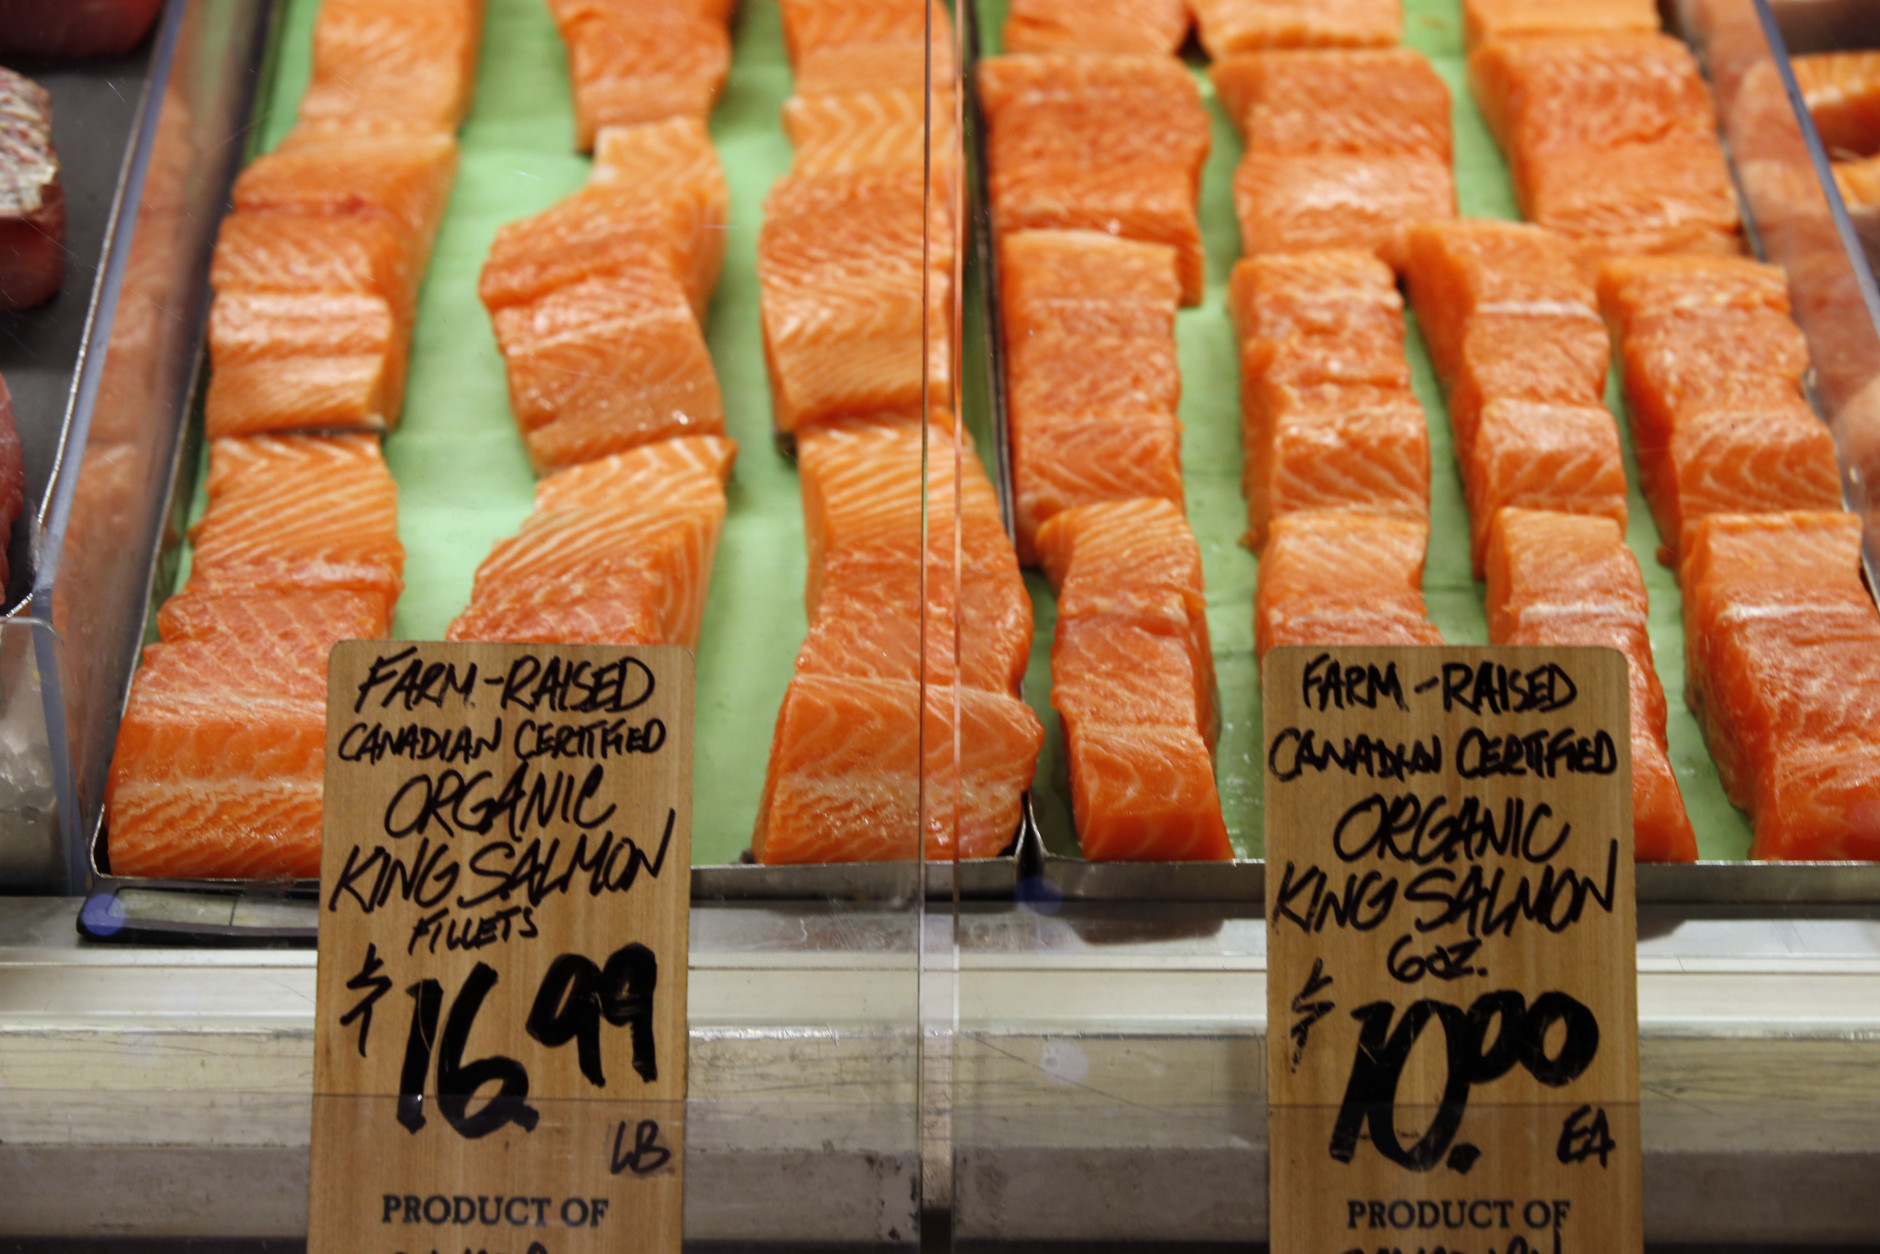 wild salmon vs farmed salmon